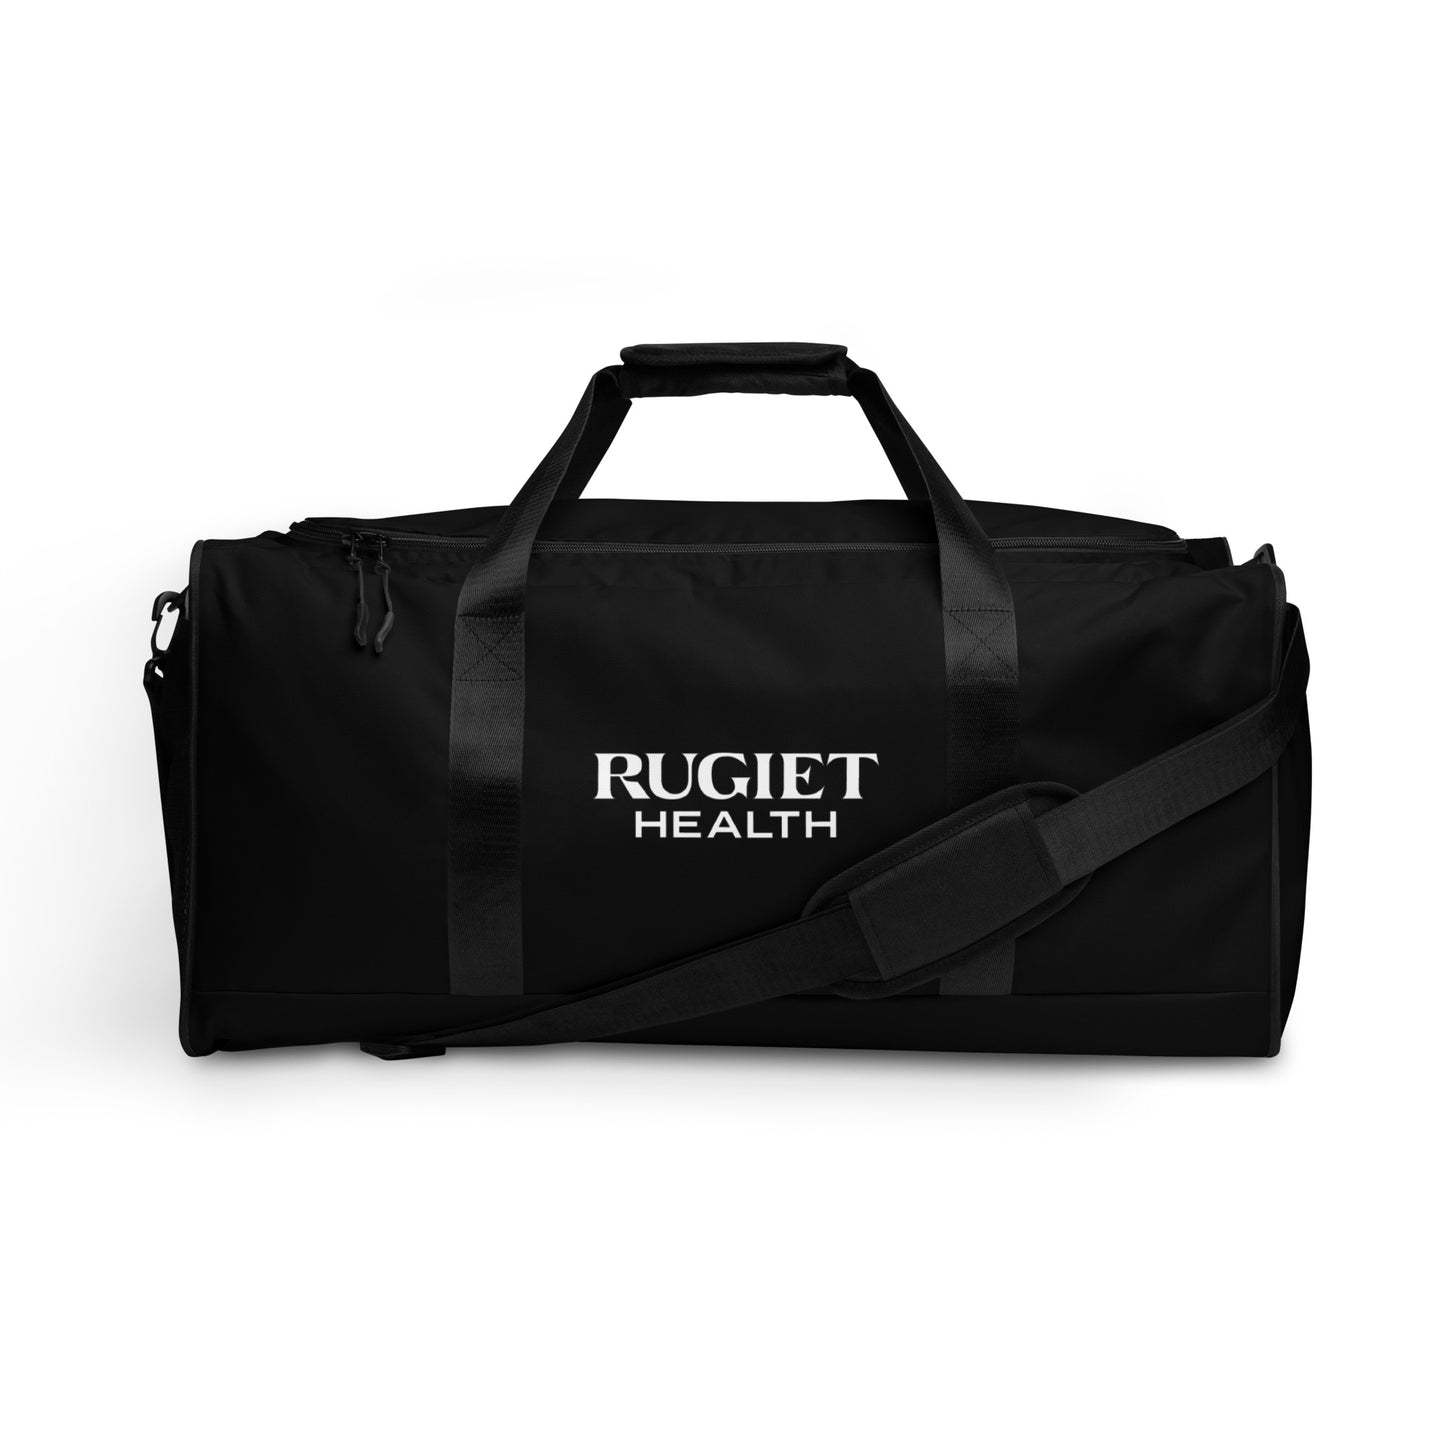 Duffle bag - Rugiet Health